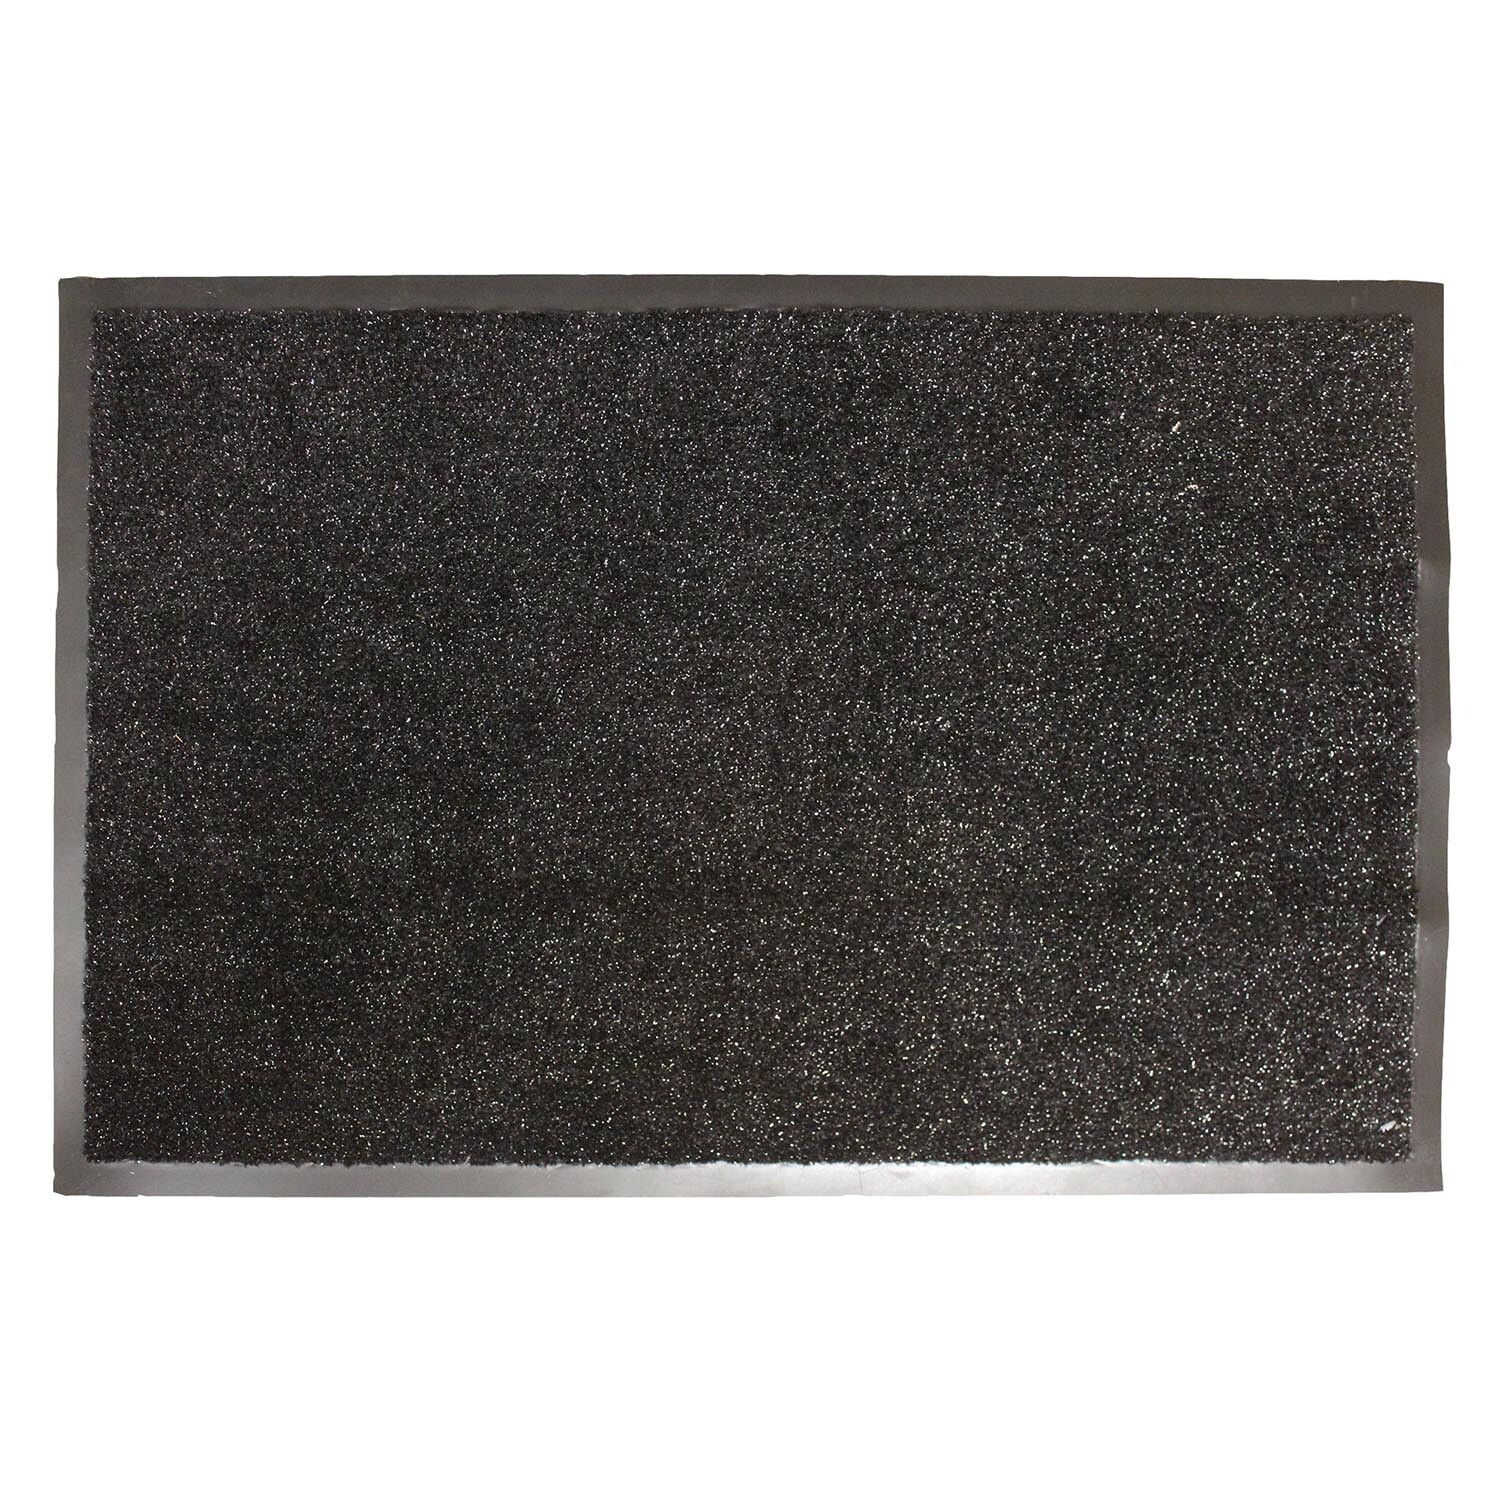 Single Mud Master PVC Doormat 60 x 40cm in Assorted styles Image 2